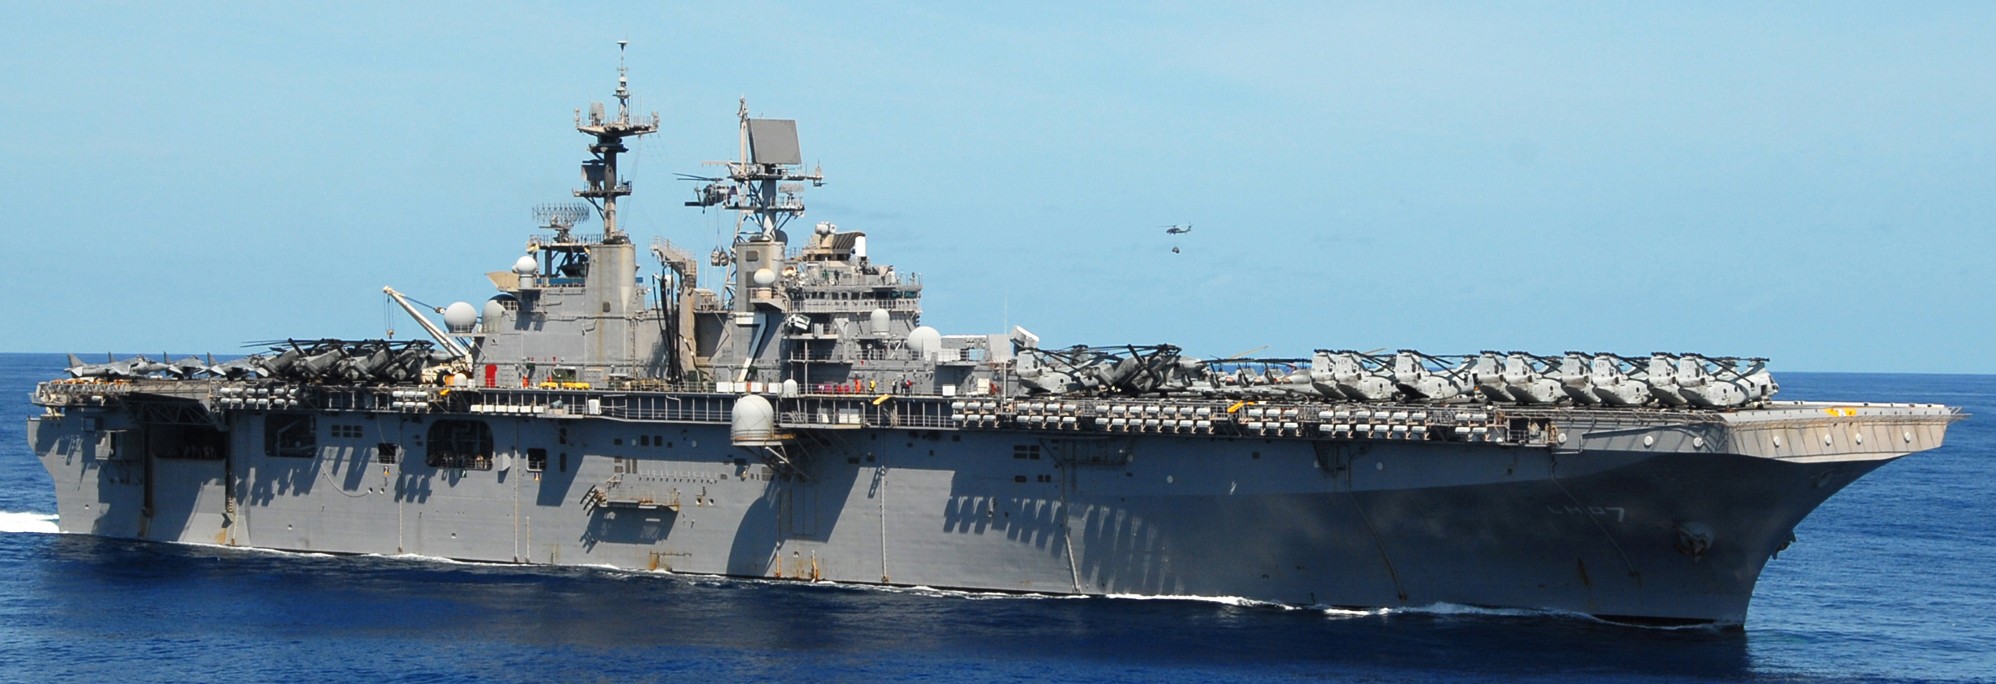 lhd-7 uss iwo jima wasp class amphibious assault ship dock landing helicopter us navy hmm-264 marines 43